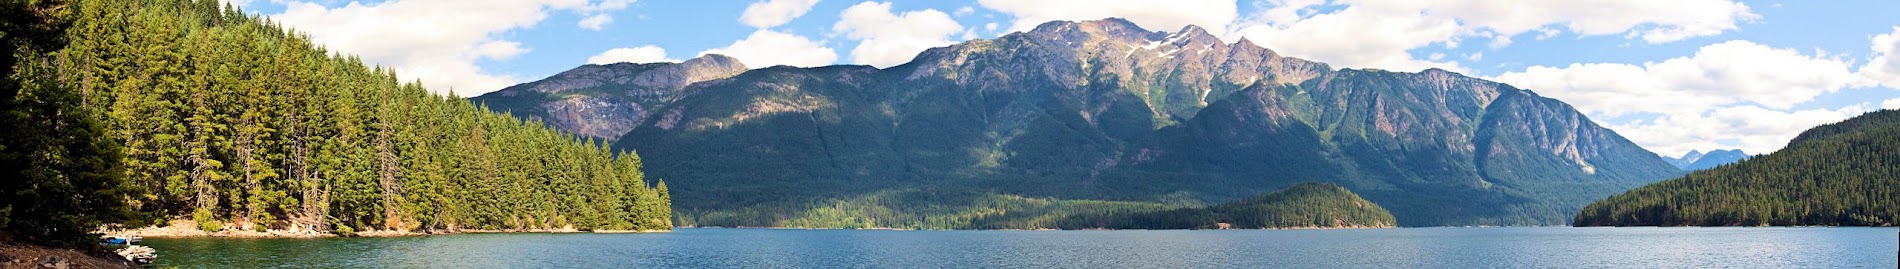 2012-09-Ross-Lake-Big-Bear-panorama.jpg